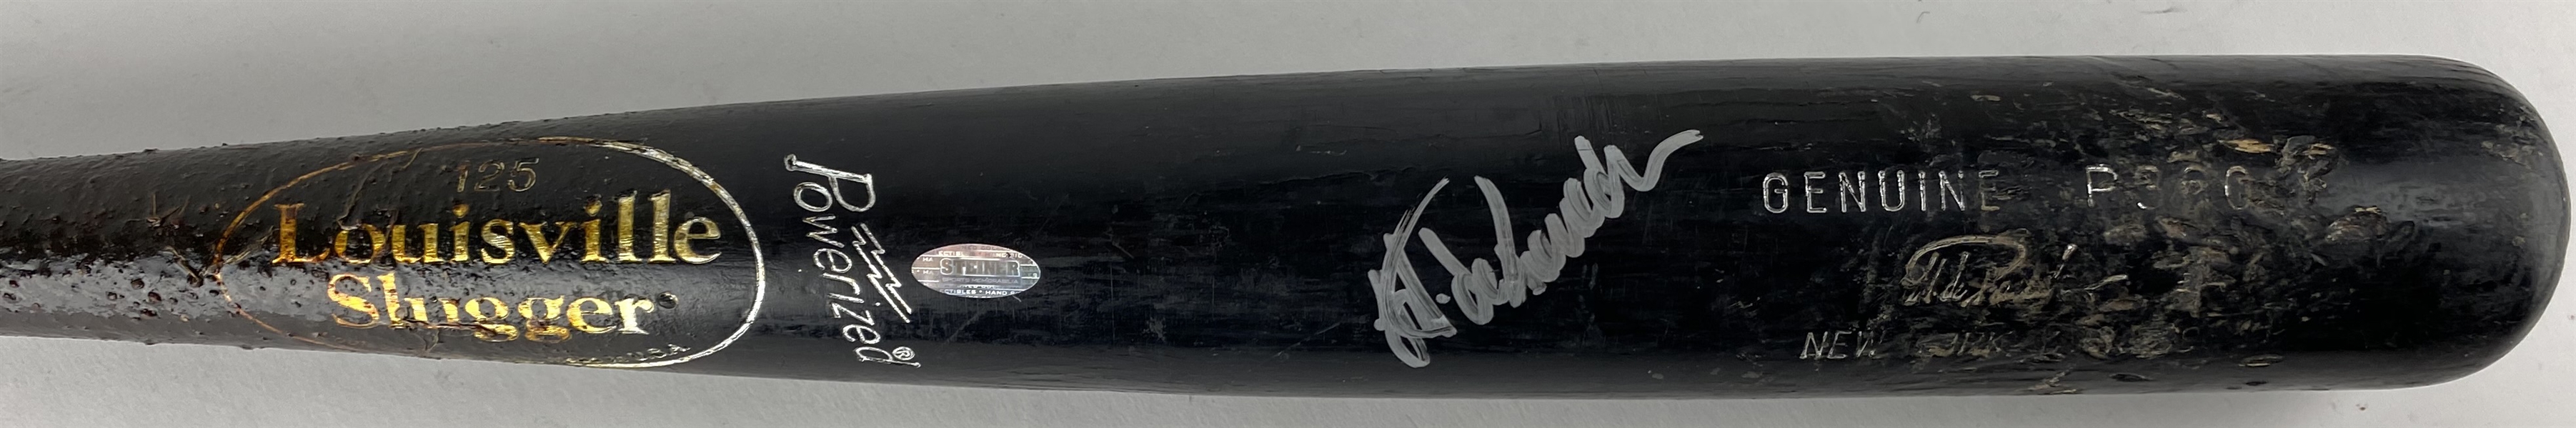 Jorge Posada Signed & Game Used 2004 P320 Baseball Bat (PSA/DNA)